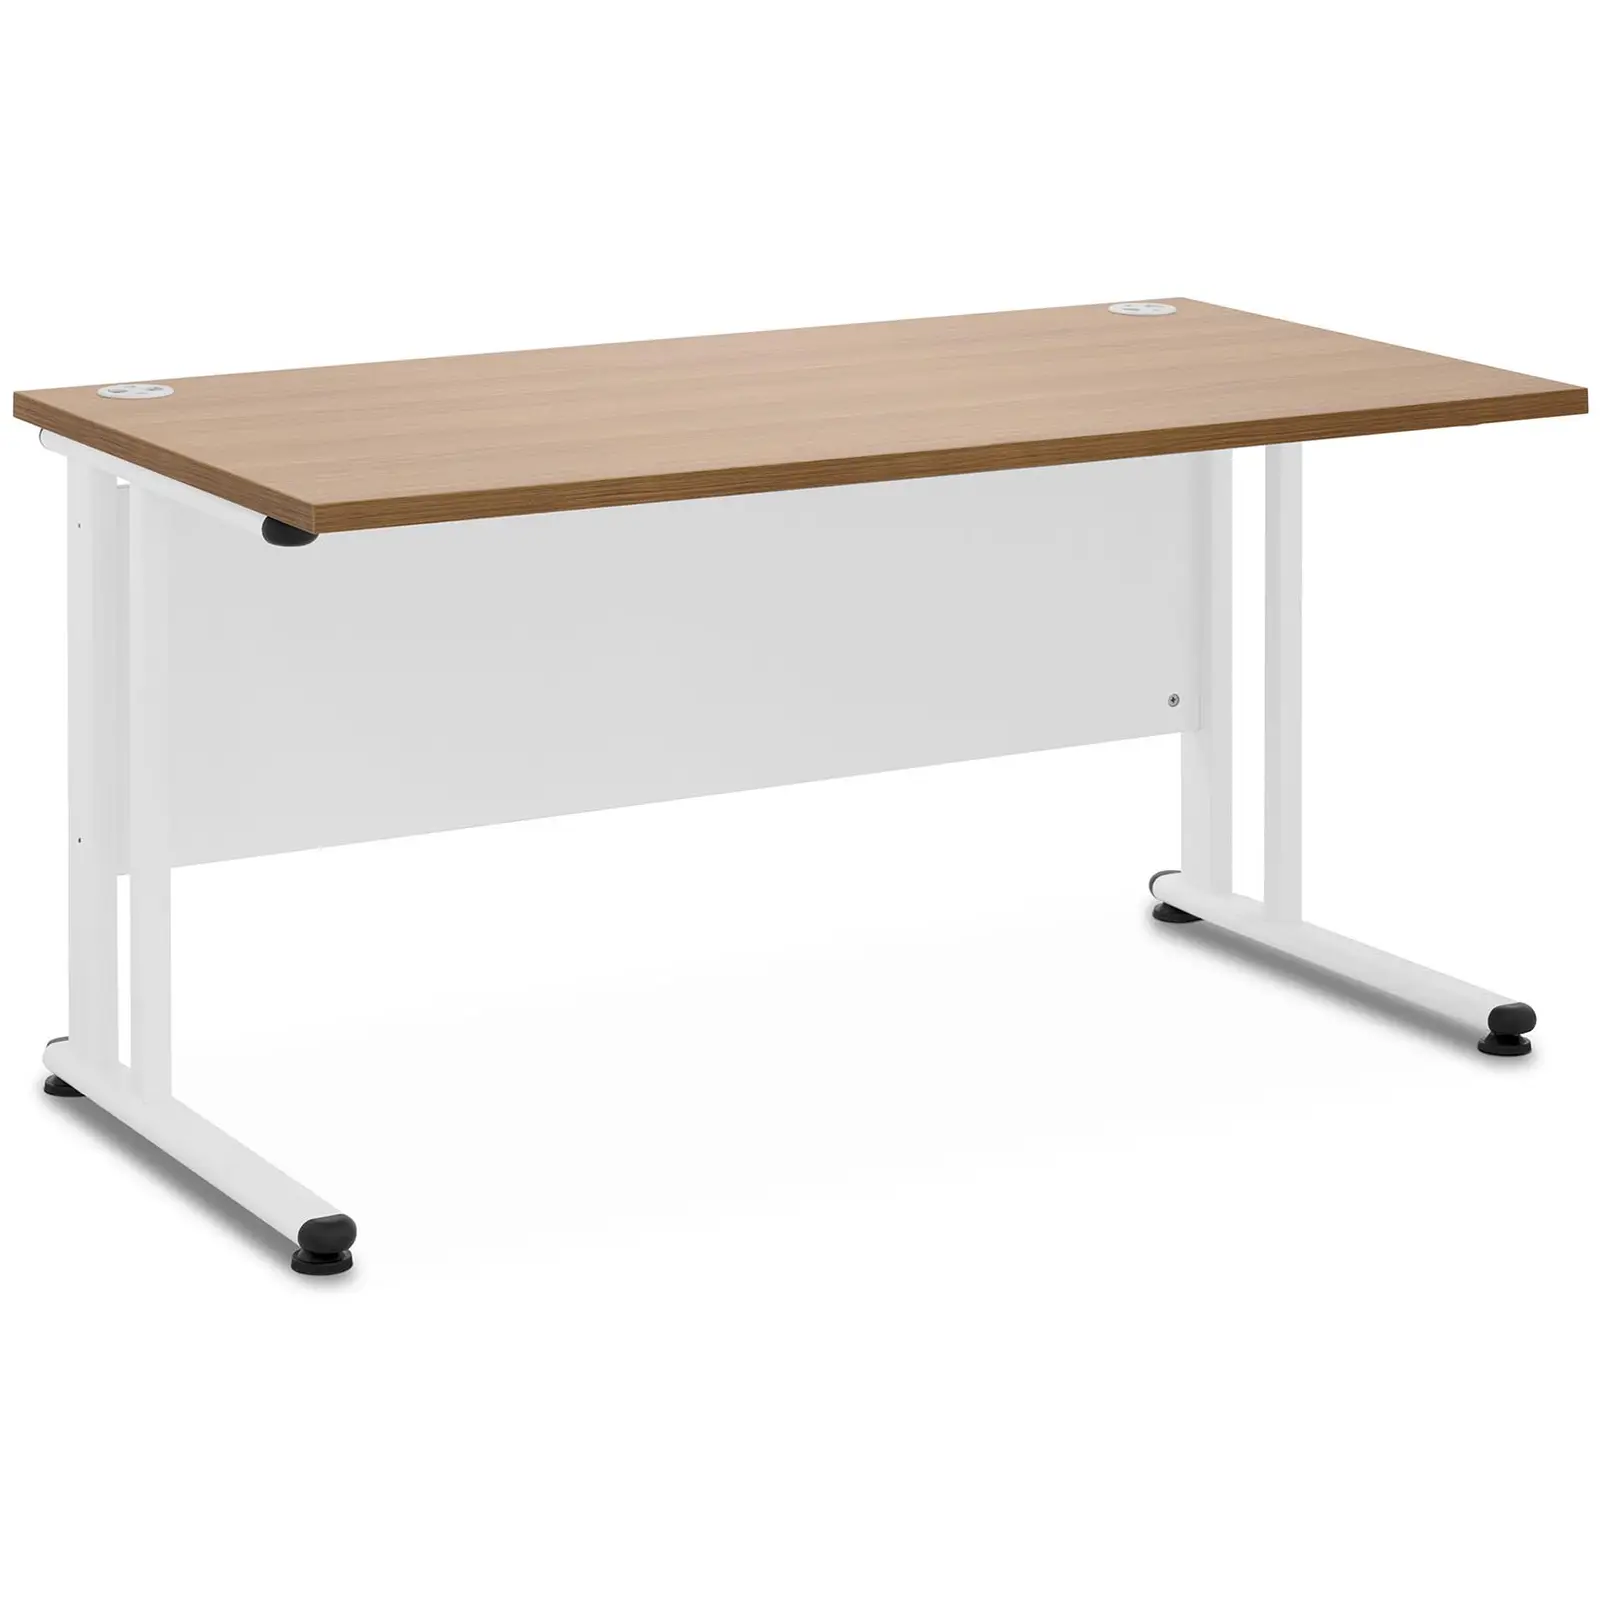 Íróasztal - 140 x 73 cm - barna/fehér